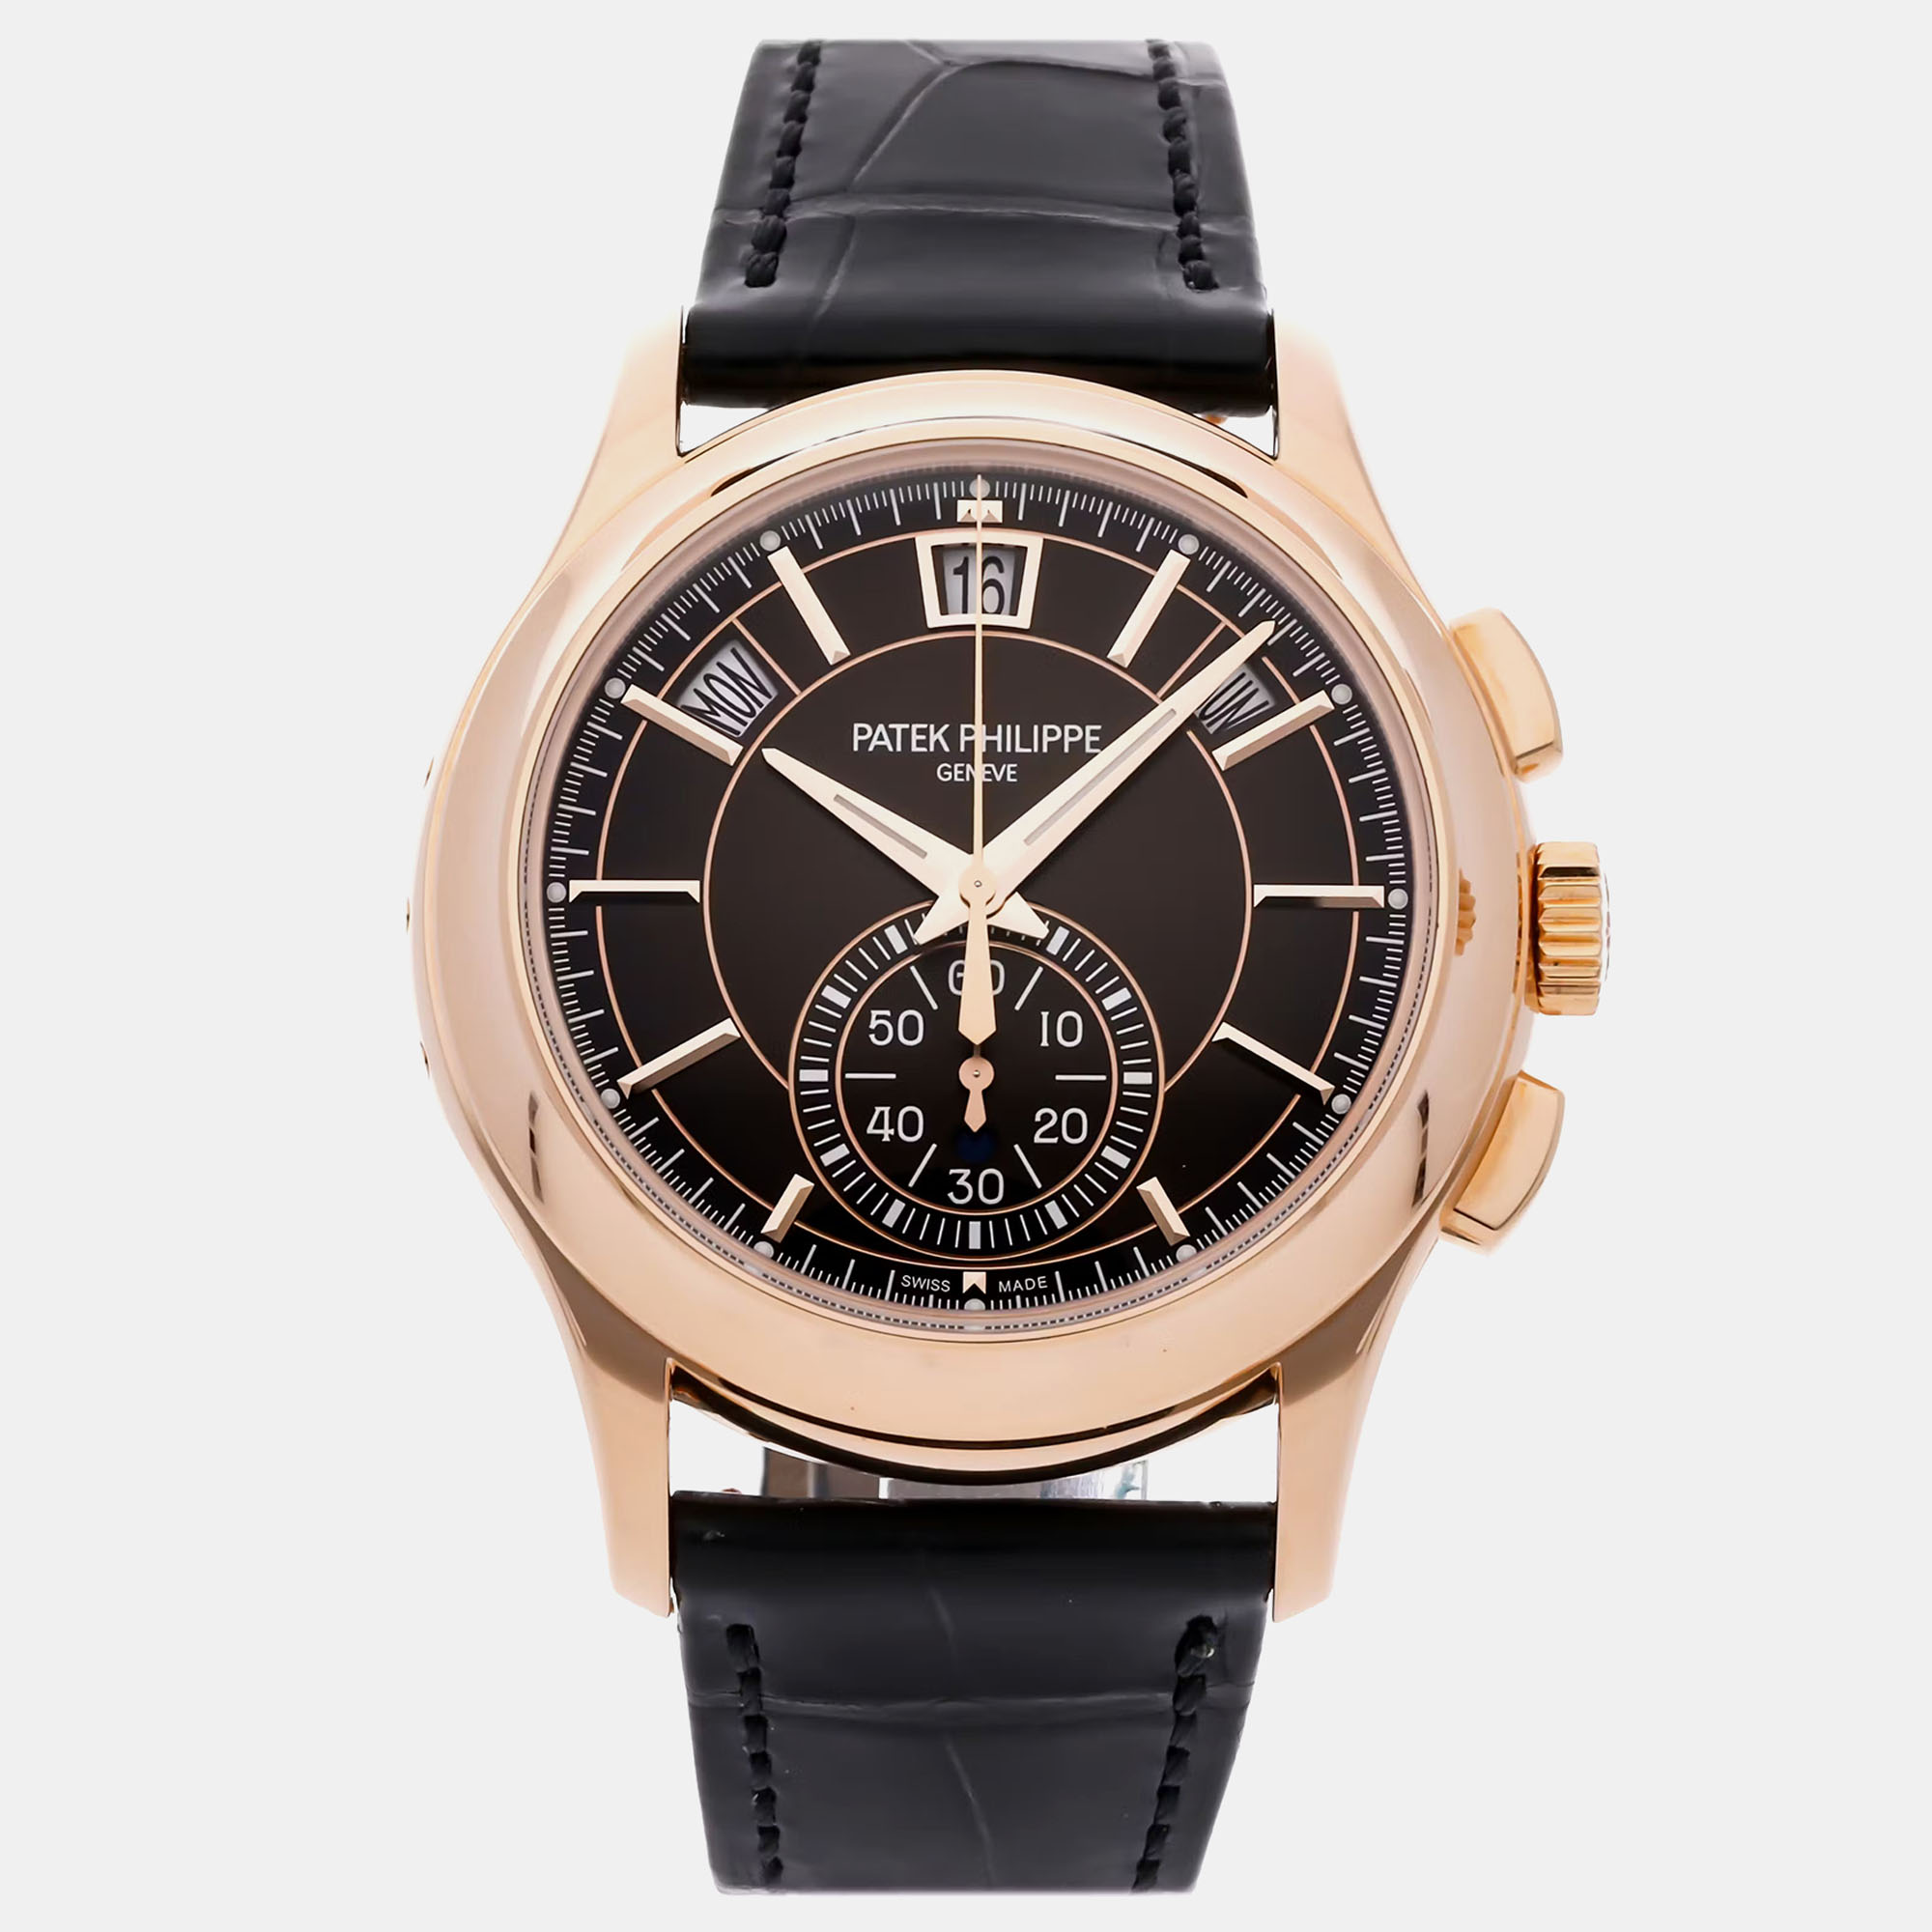 Patek philippe brown 18k rose gold complications automatic men's wristwatch 42 mm